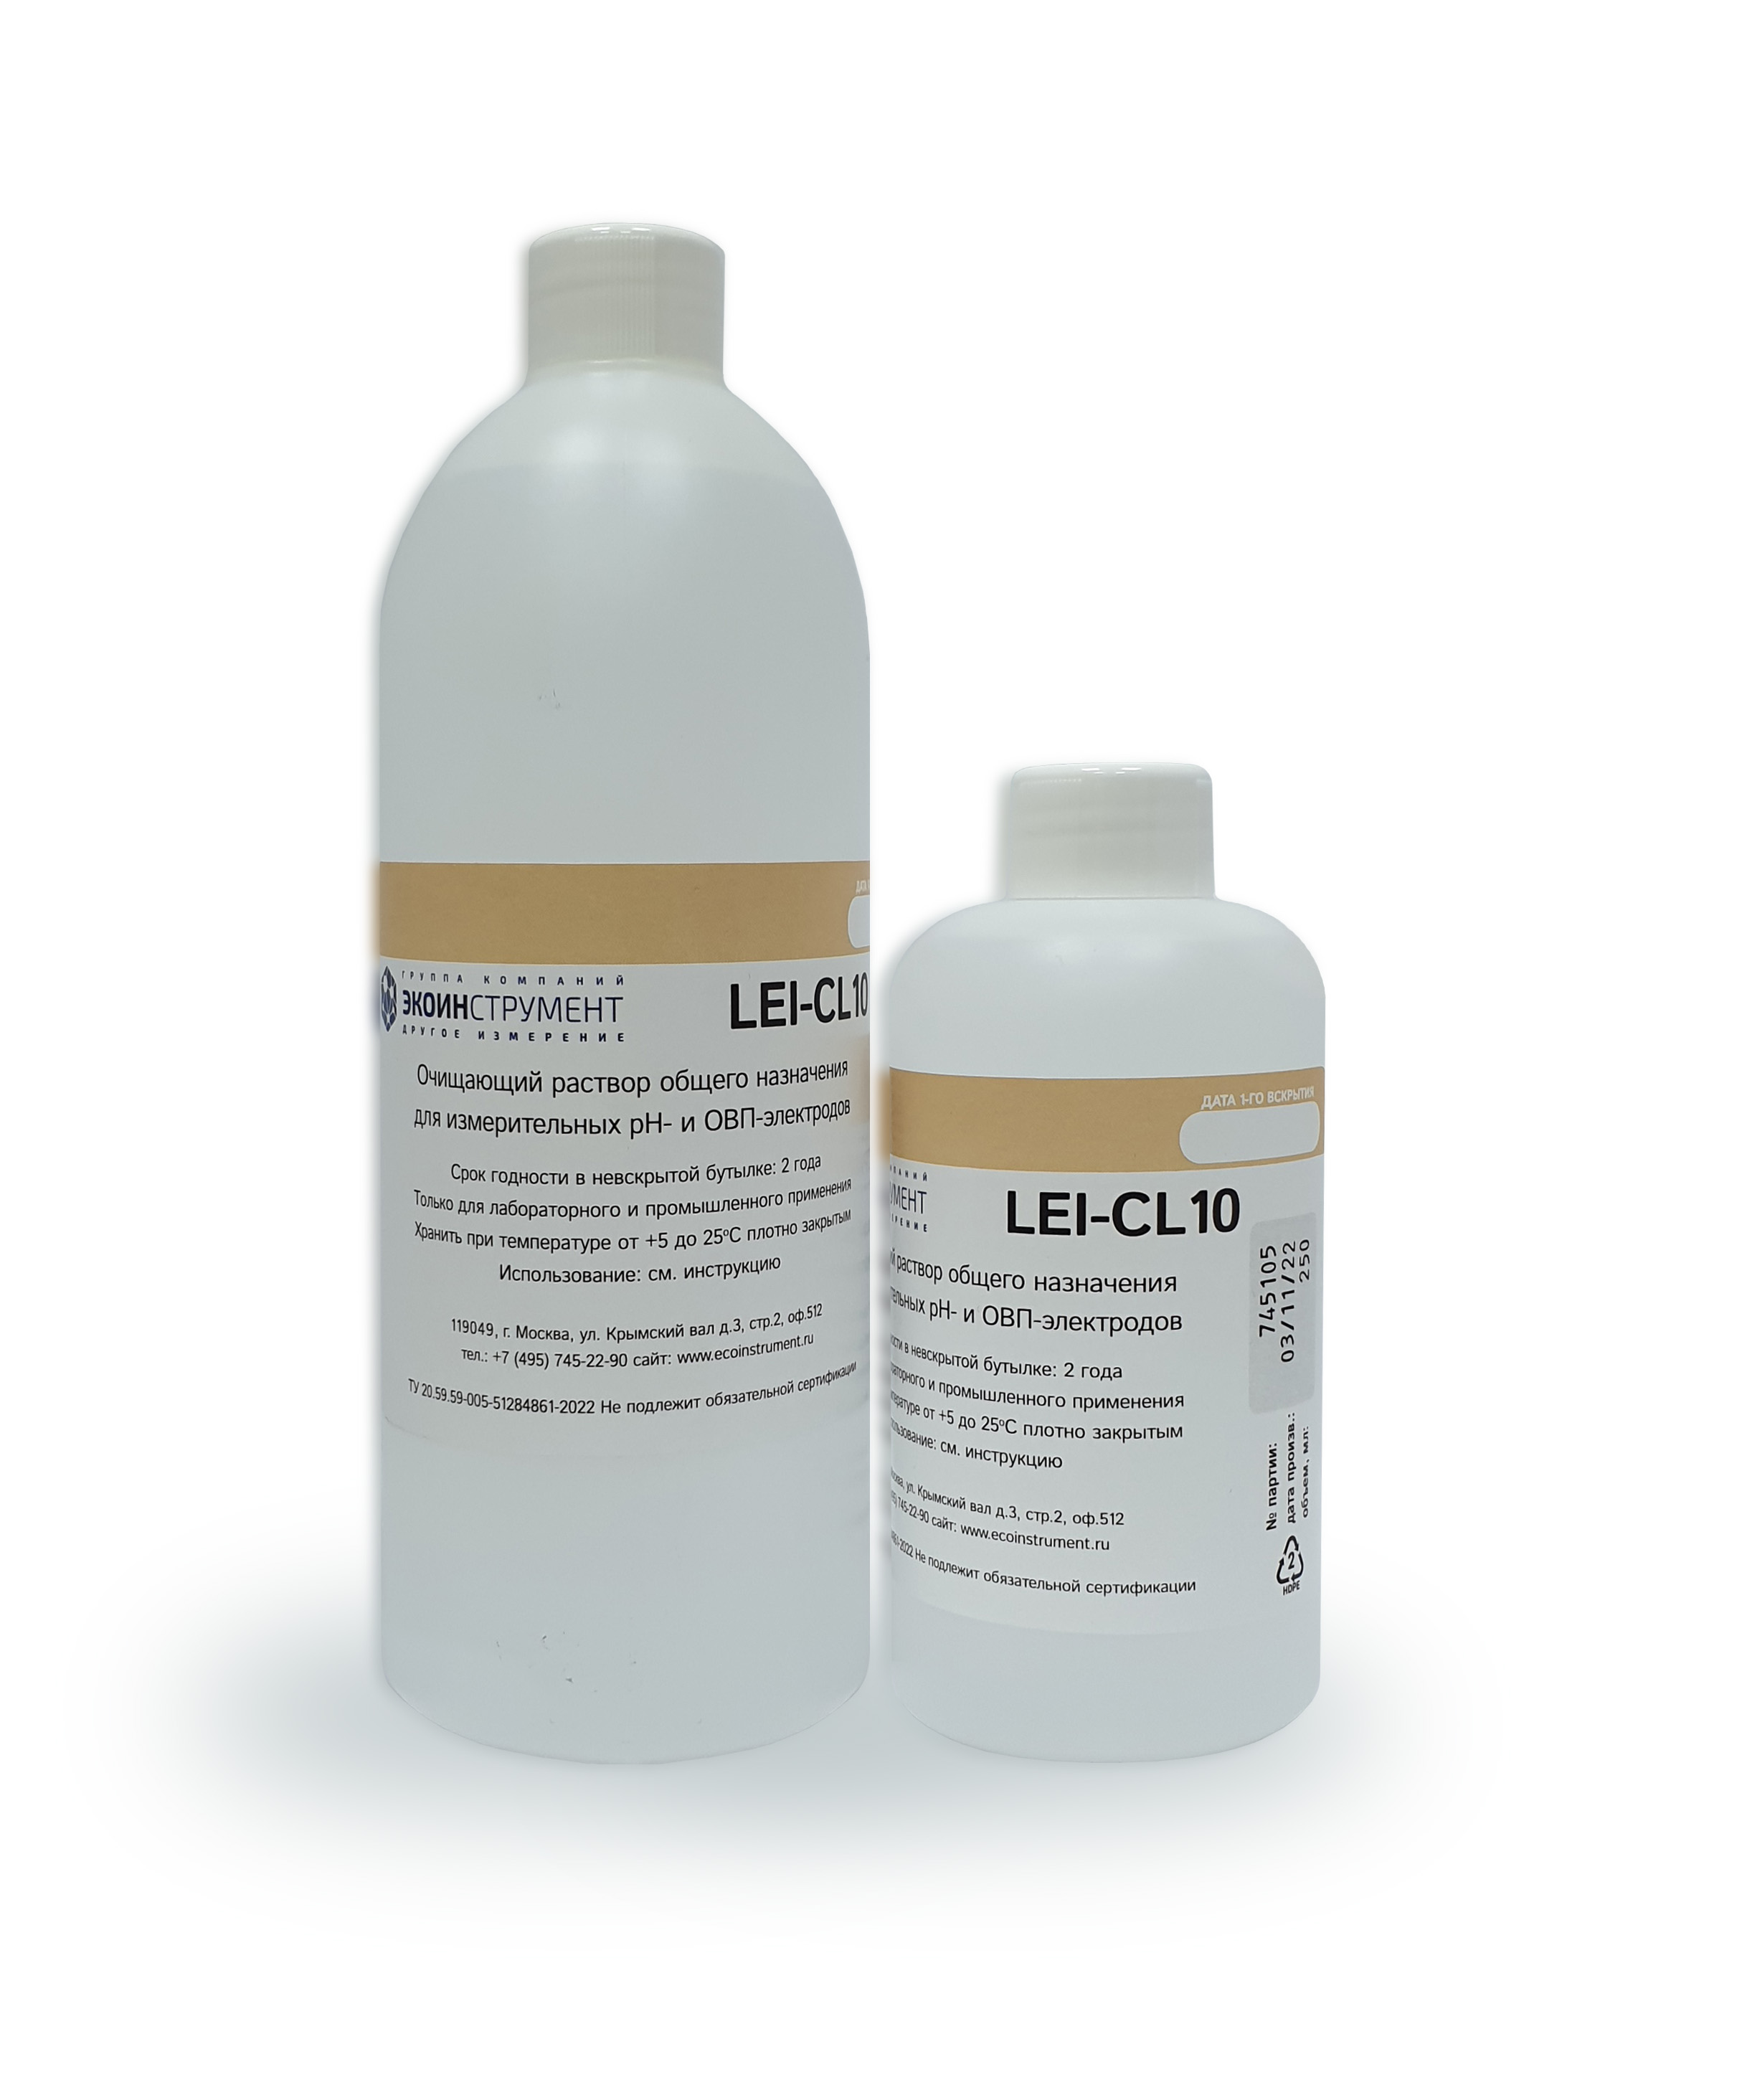 LEI-CL10-500 и LEI-CL10-250 Растворы для очистки pH и ОВП электродов , 500 мл,250 мл